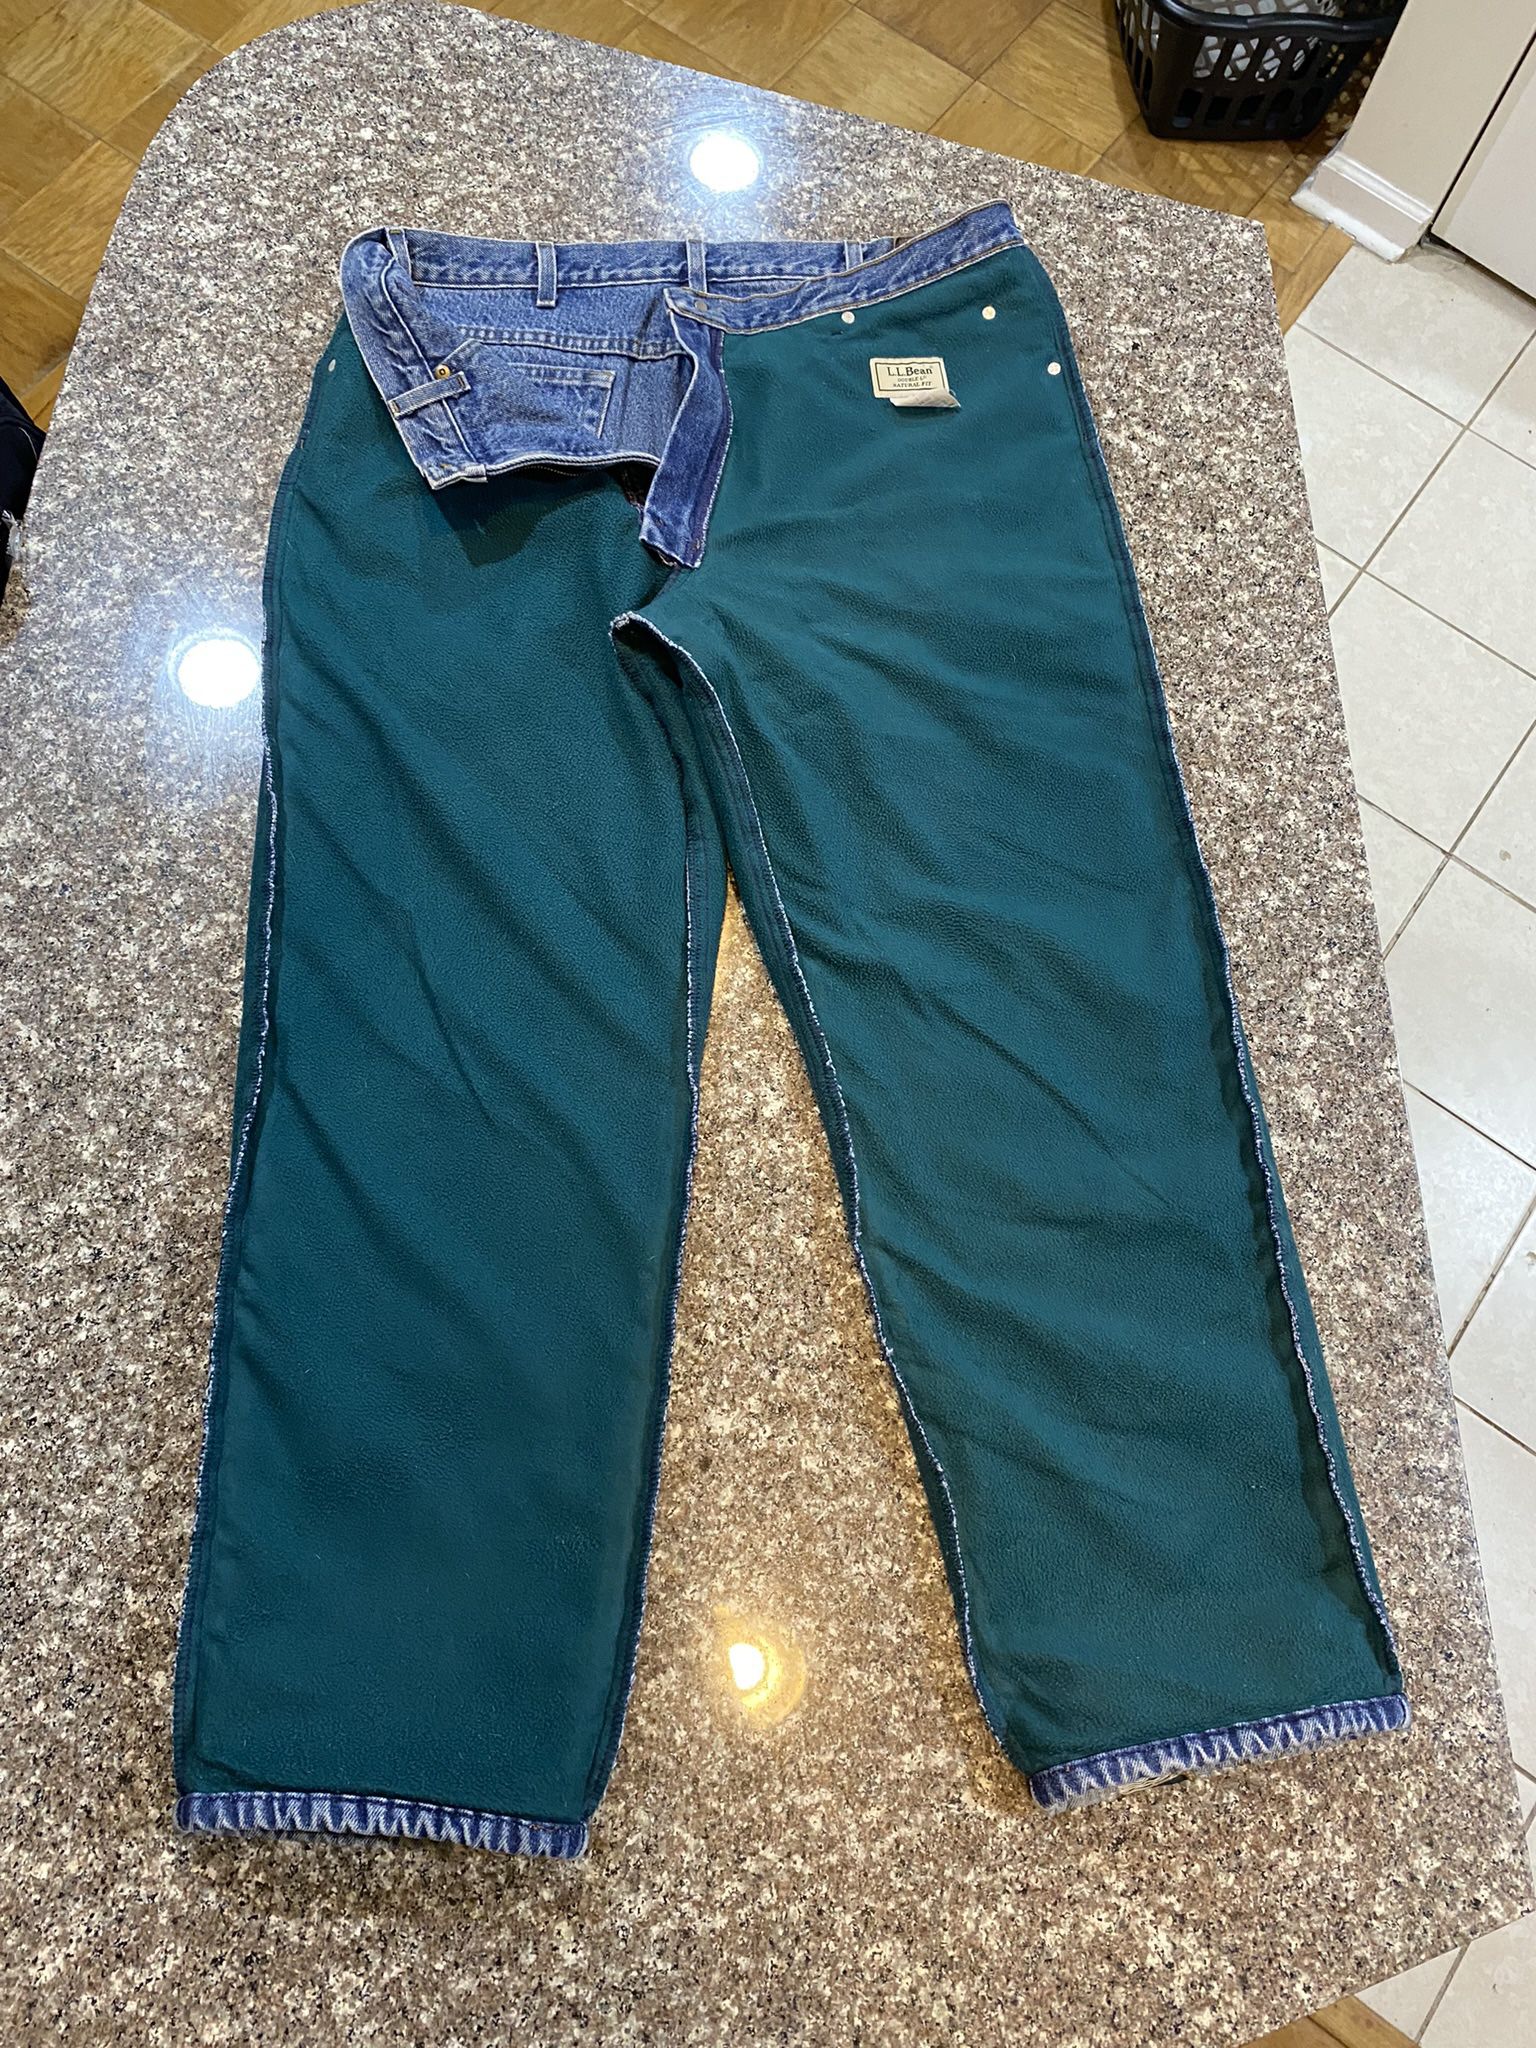 Vintage Mens LL Bean Double L classic fit Fleece Lined Jeans size 36 x 29